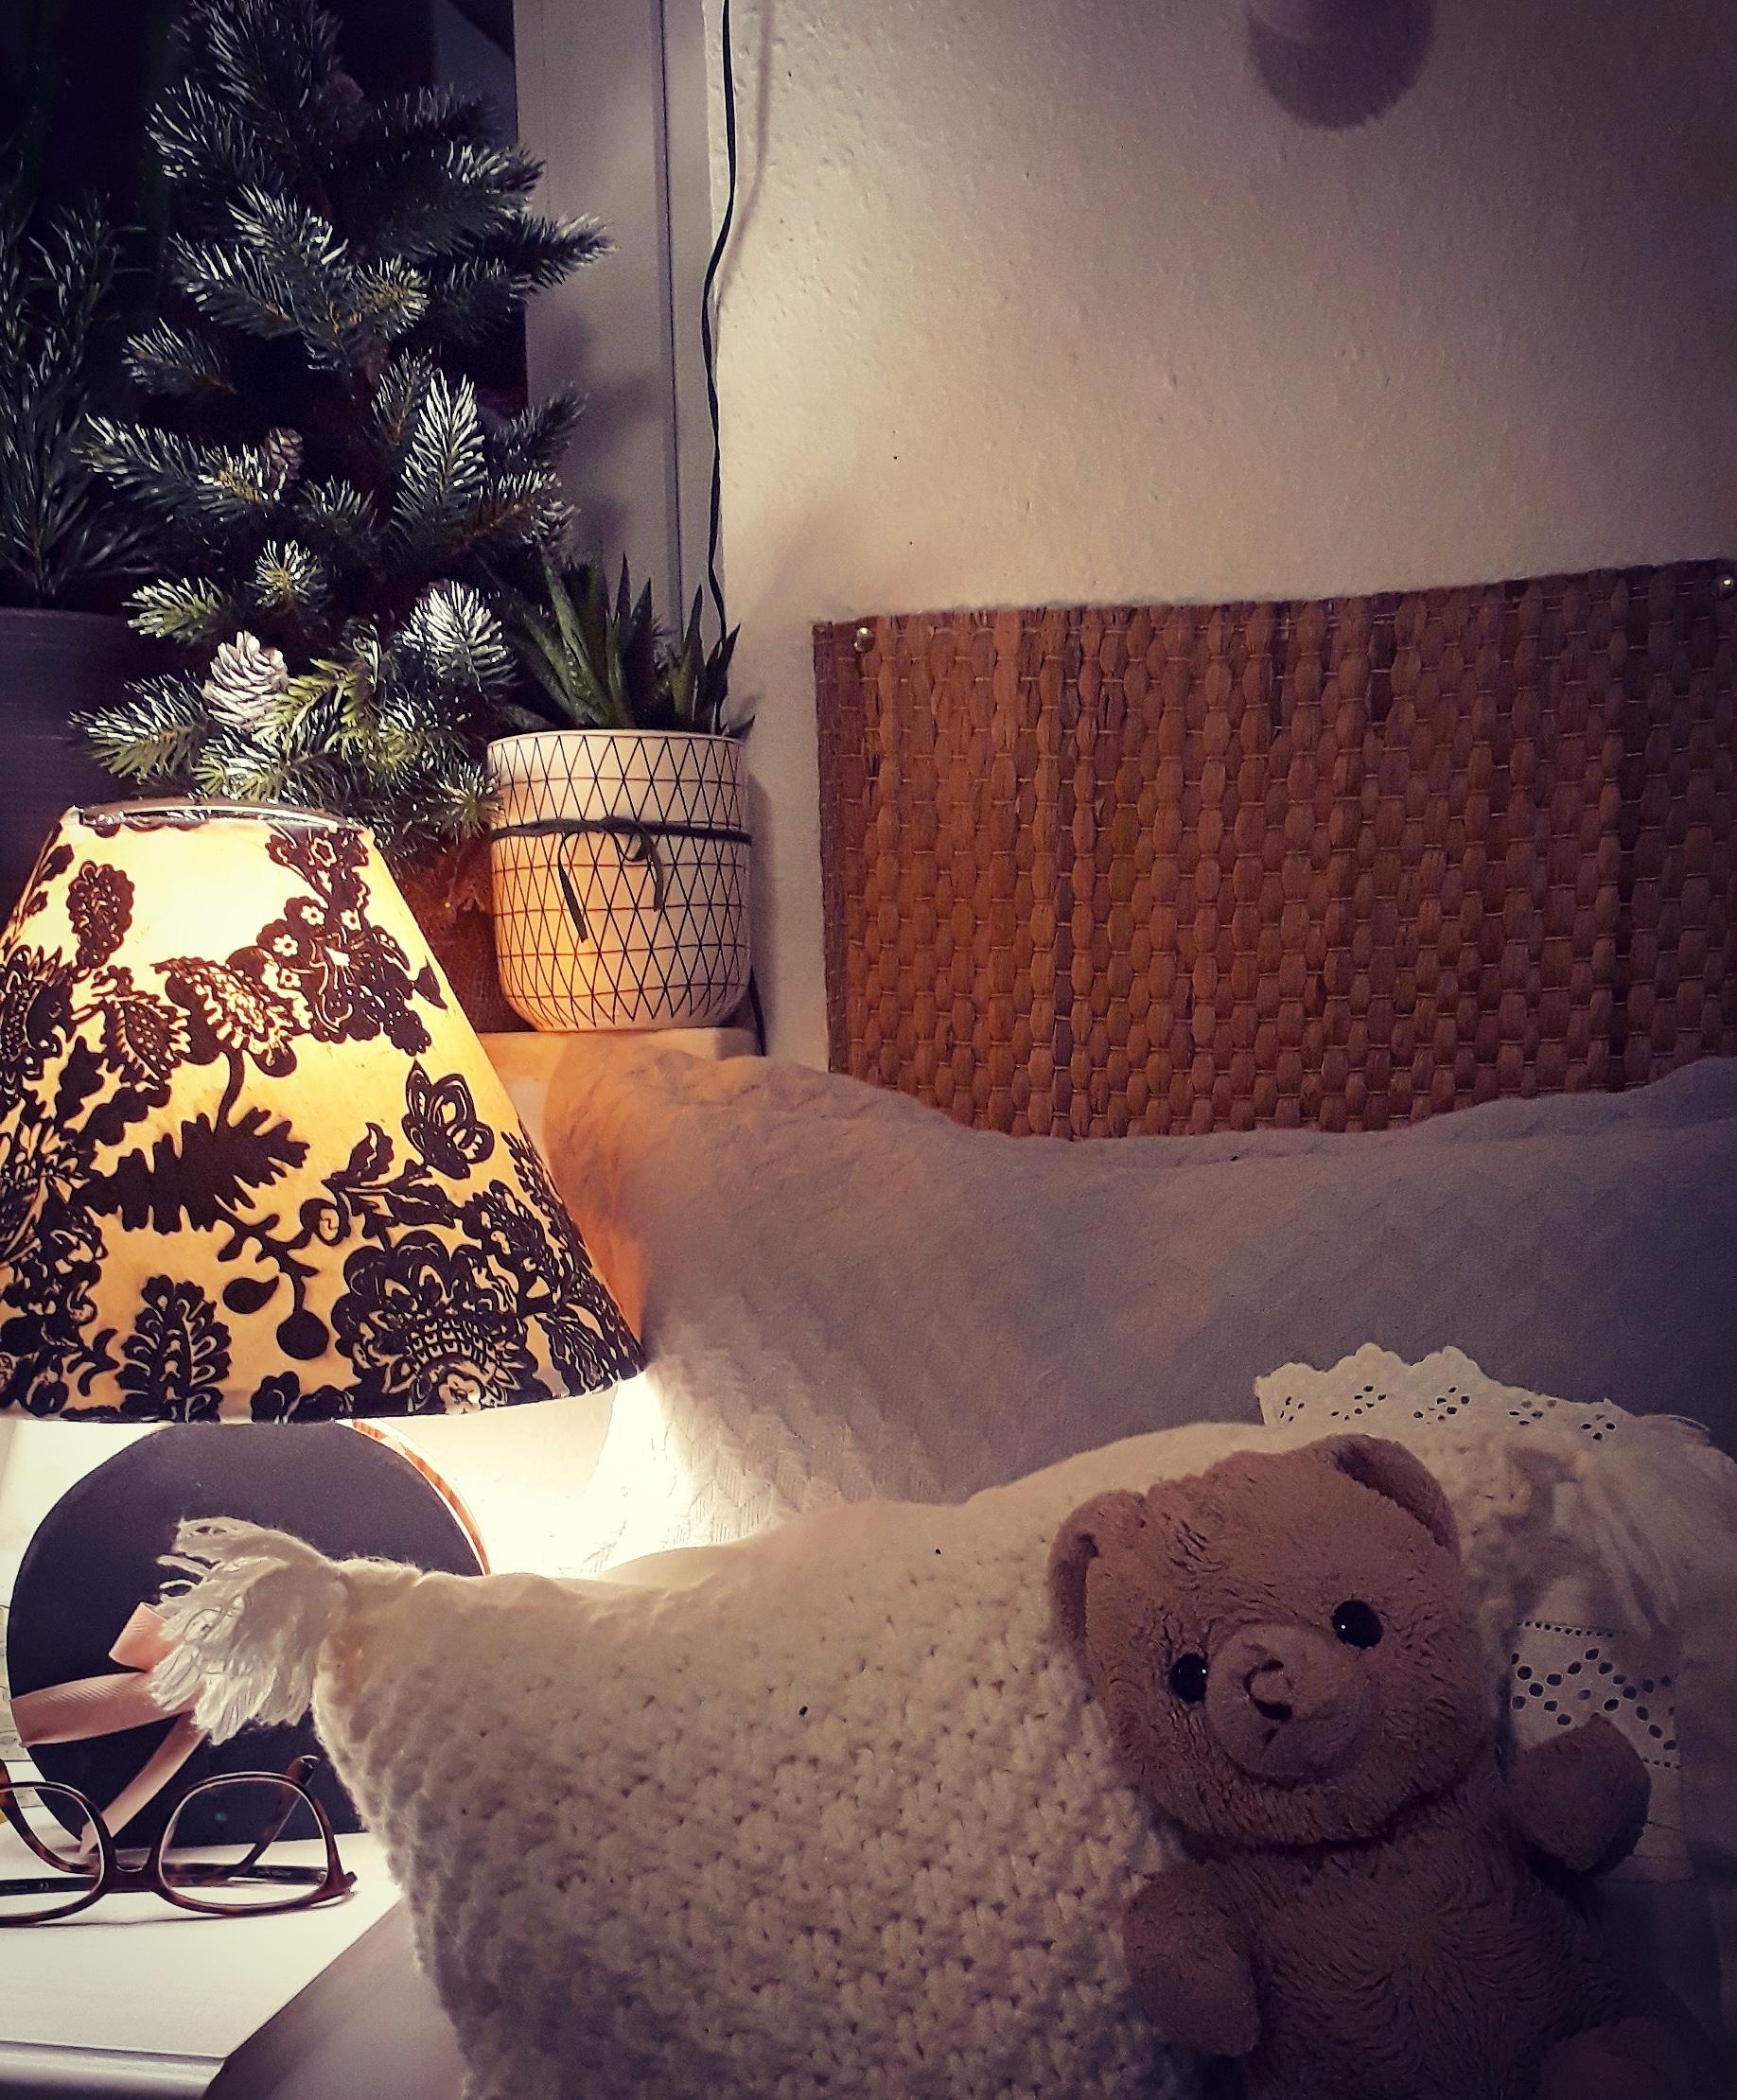 Winter coziness for Christmas dreams ☆